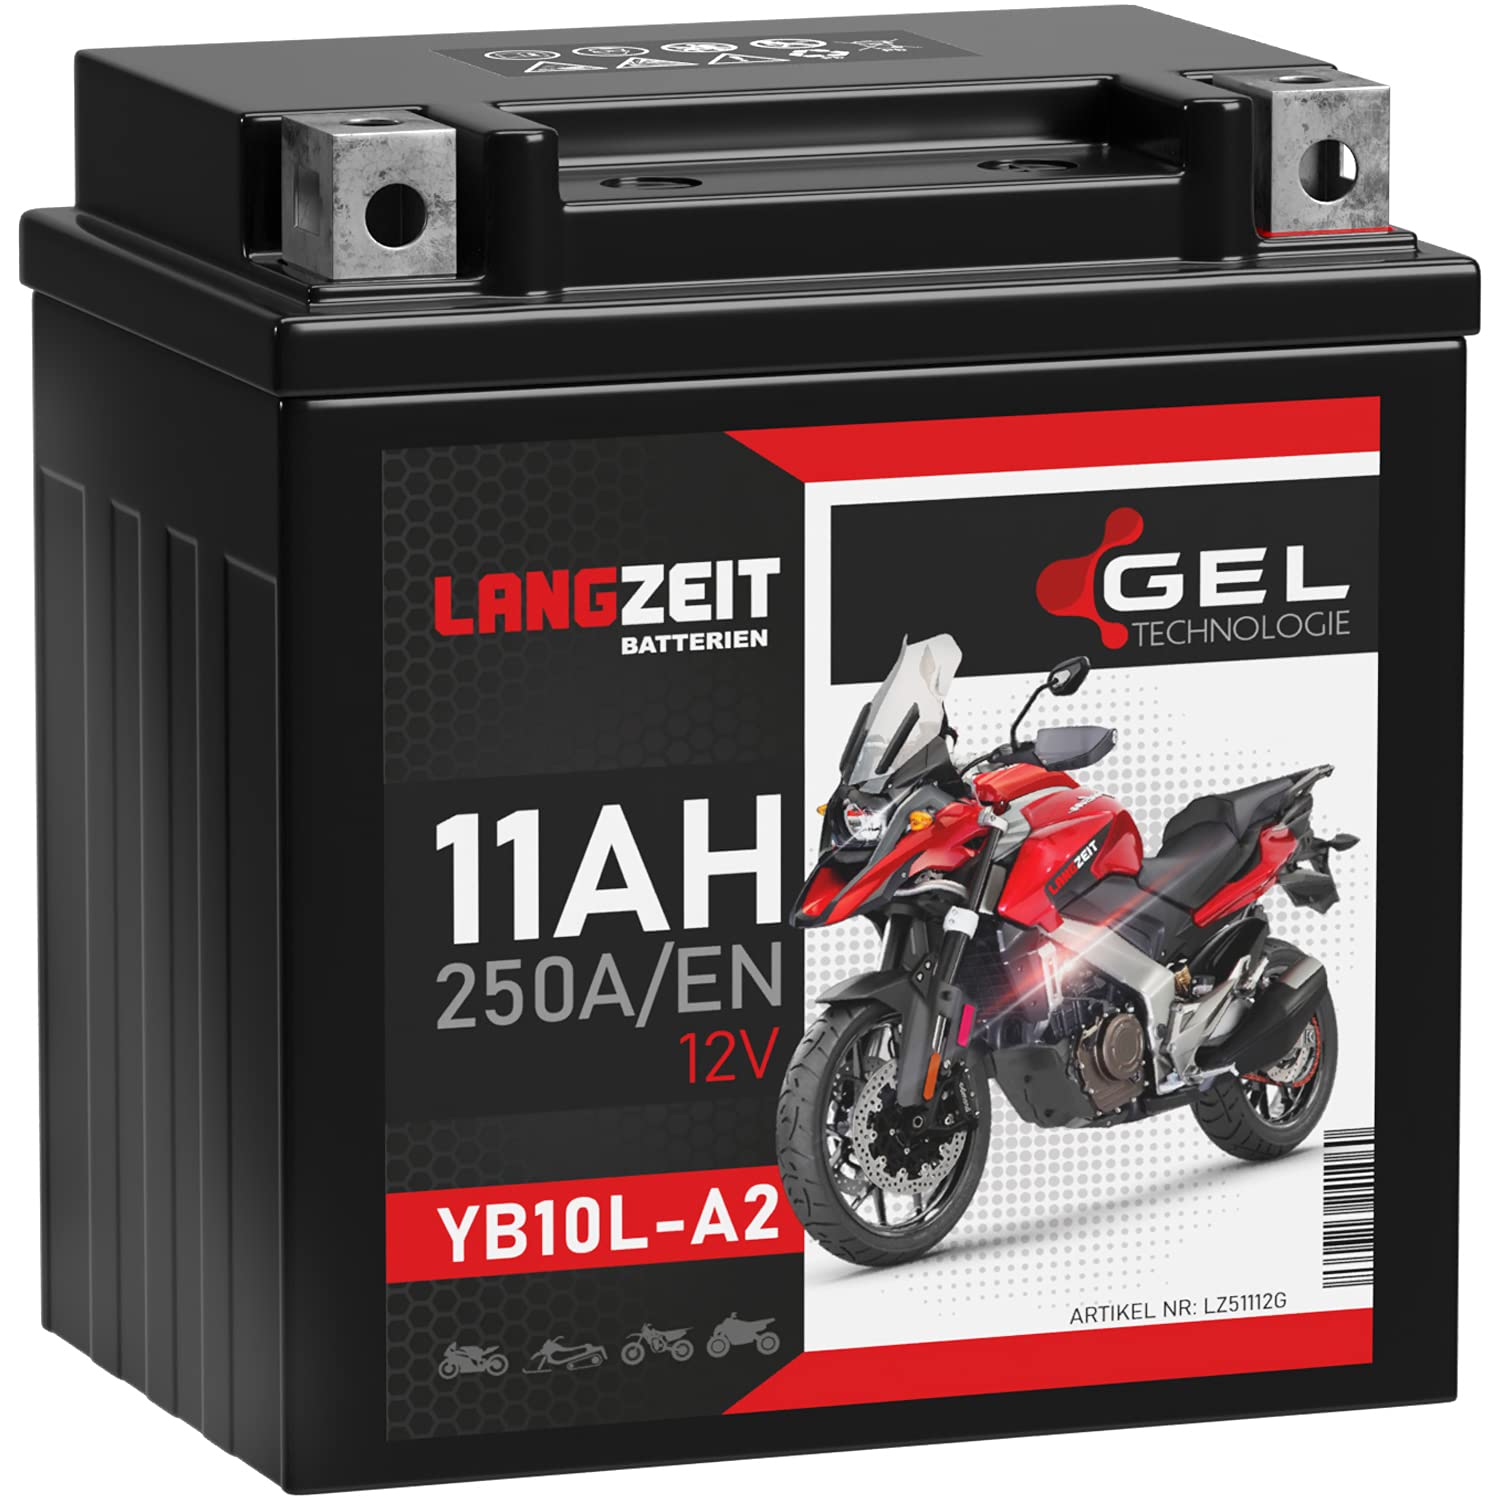 LANGZEIT YB10L-A2 Motorradbatterie GEL 12V 11Ah 250A/EN 51112 YB10L-BS YB10L-B YB10L-B2 Batterie 12V doppelte Lebensdauer wartungsfrei von LANGZEIT Batterien